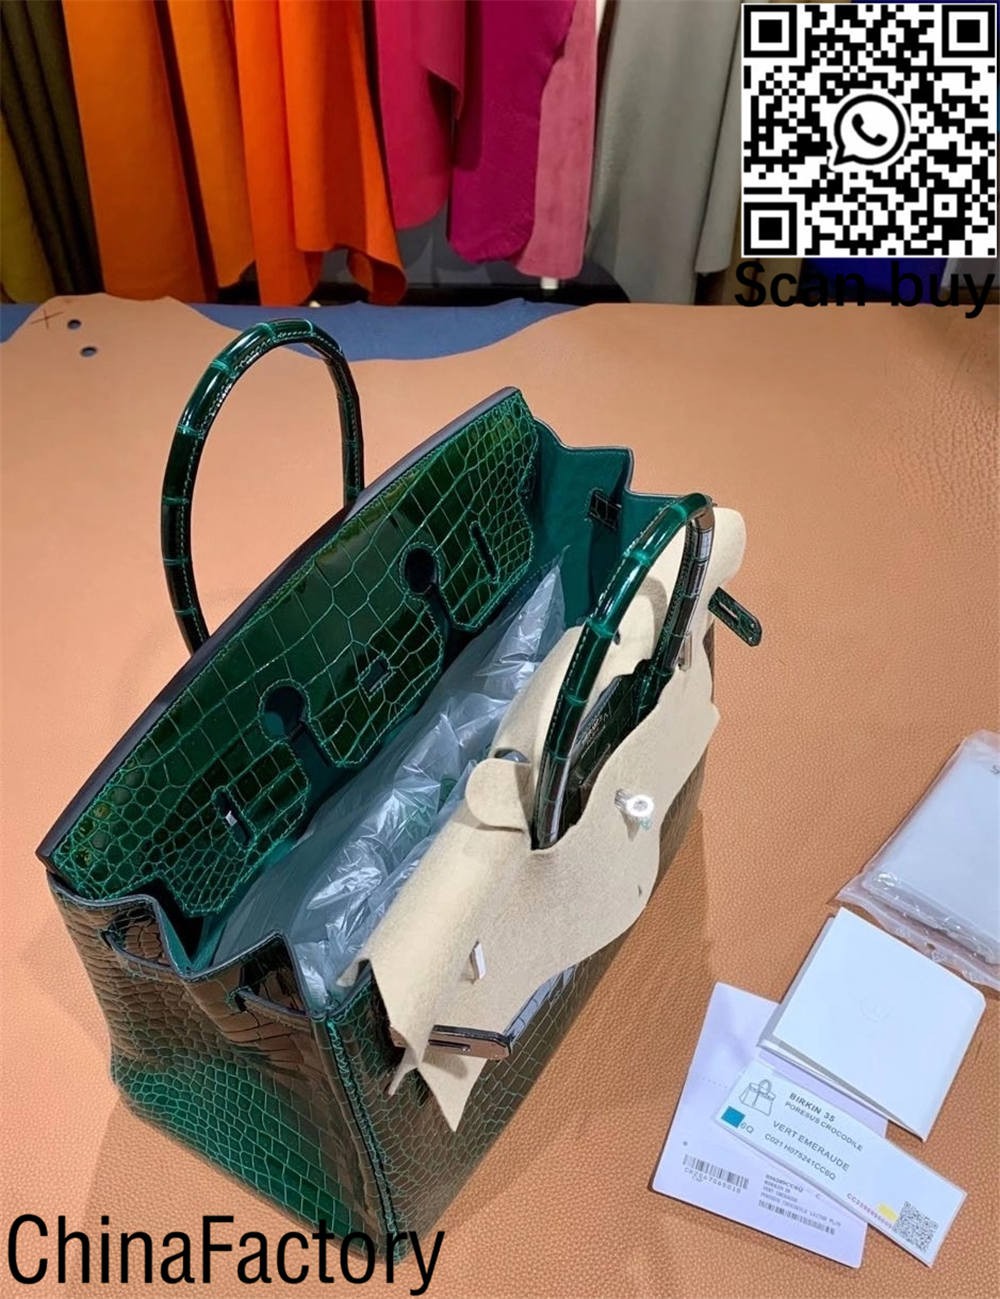 Top quality hermes crocodile birkin bag replica Australia (2022 ntjhafatswa)-Best Quality Fake Louis Vuitton Bag Online Store, Replica designer bag ru